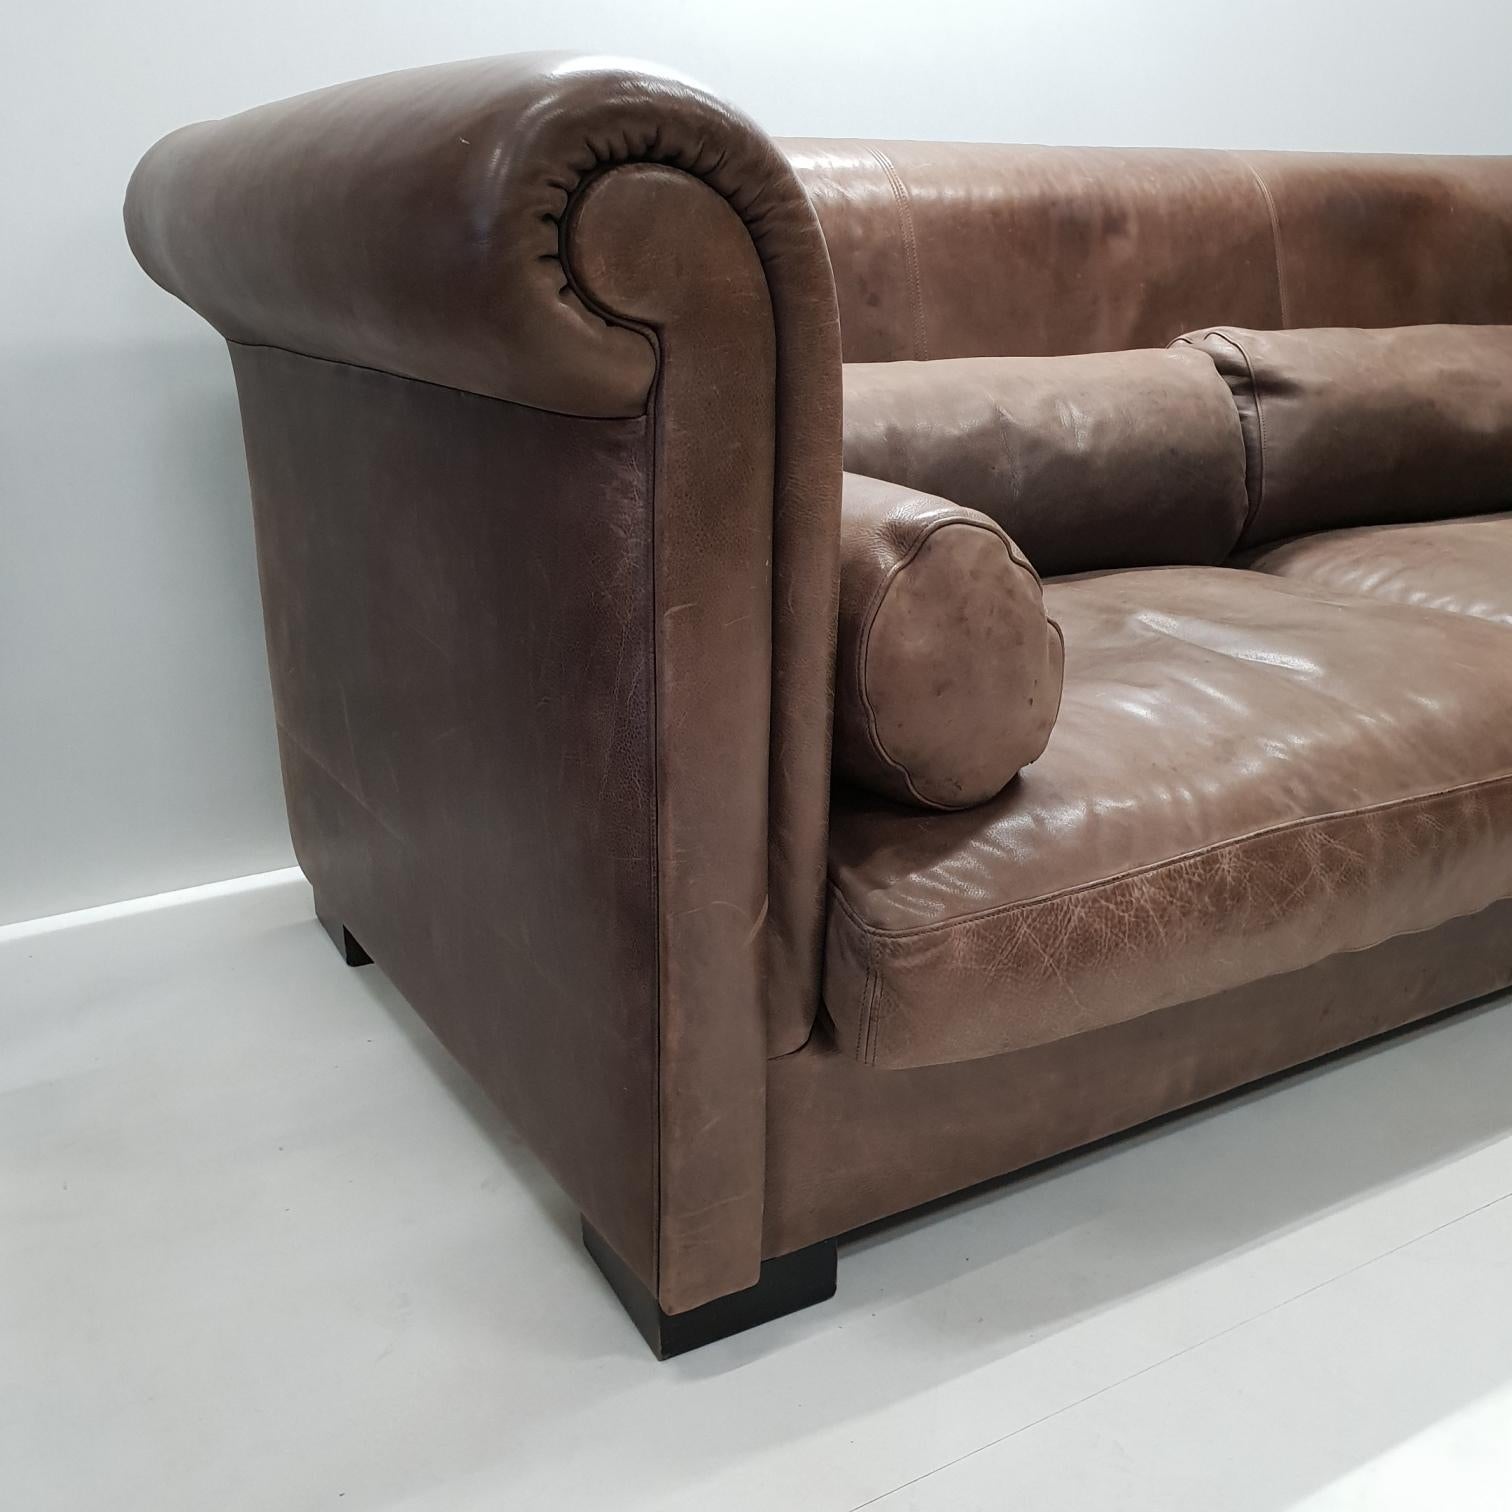 baxter alfred sofa